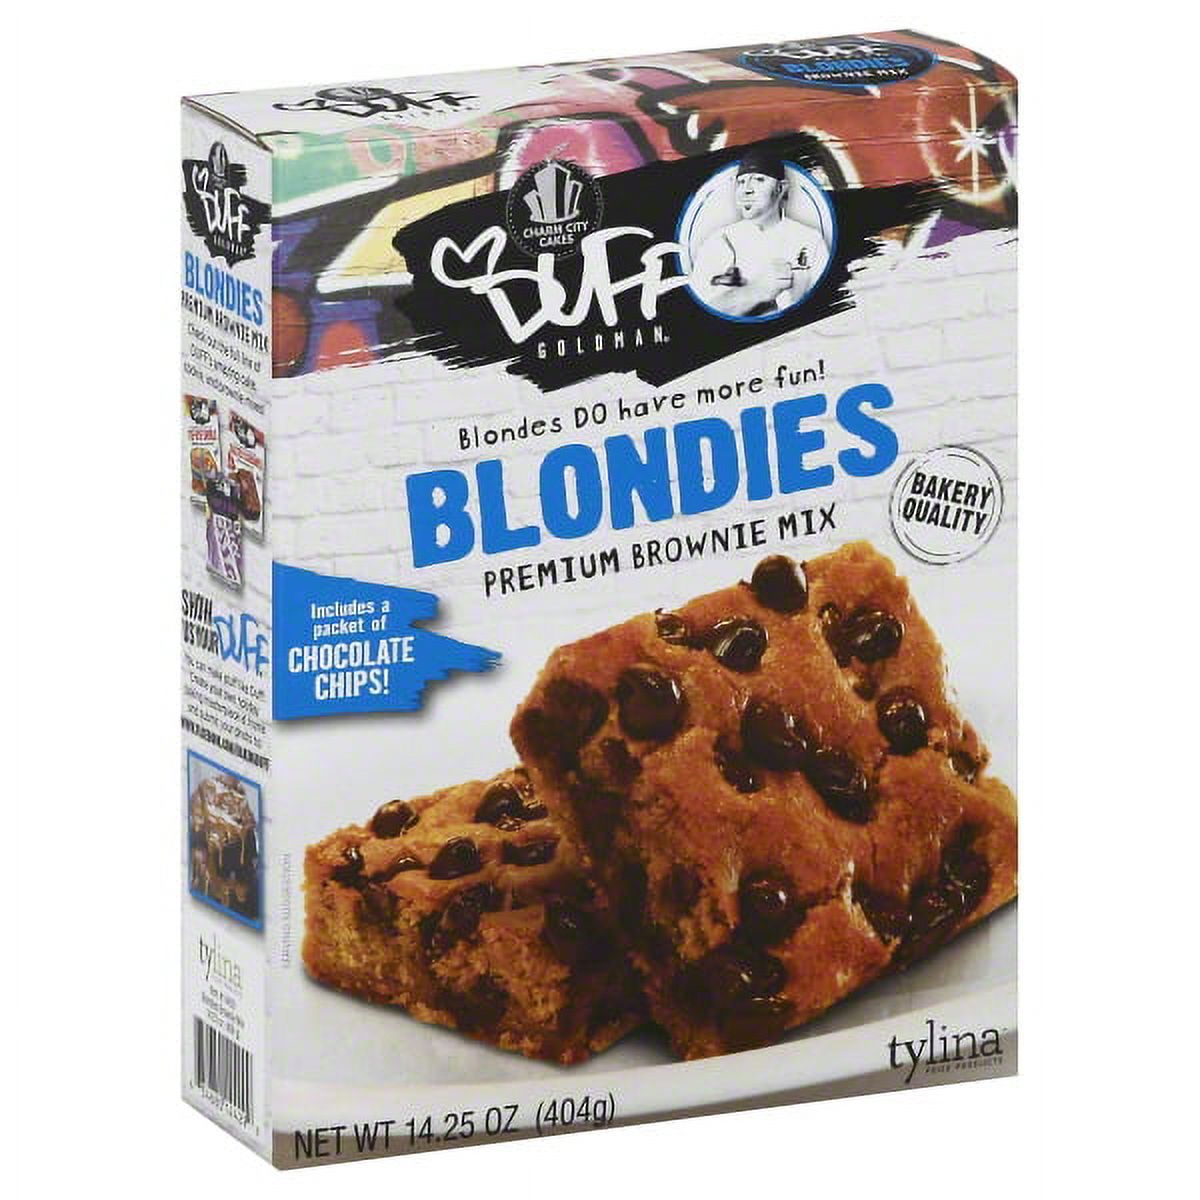 Duff Goldman Blondies Premium Brownie Mix, 14.25 oz - image 1 of 8